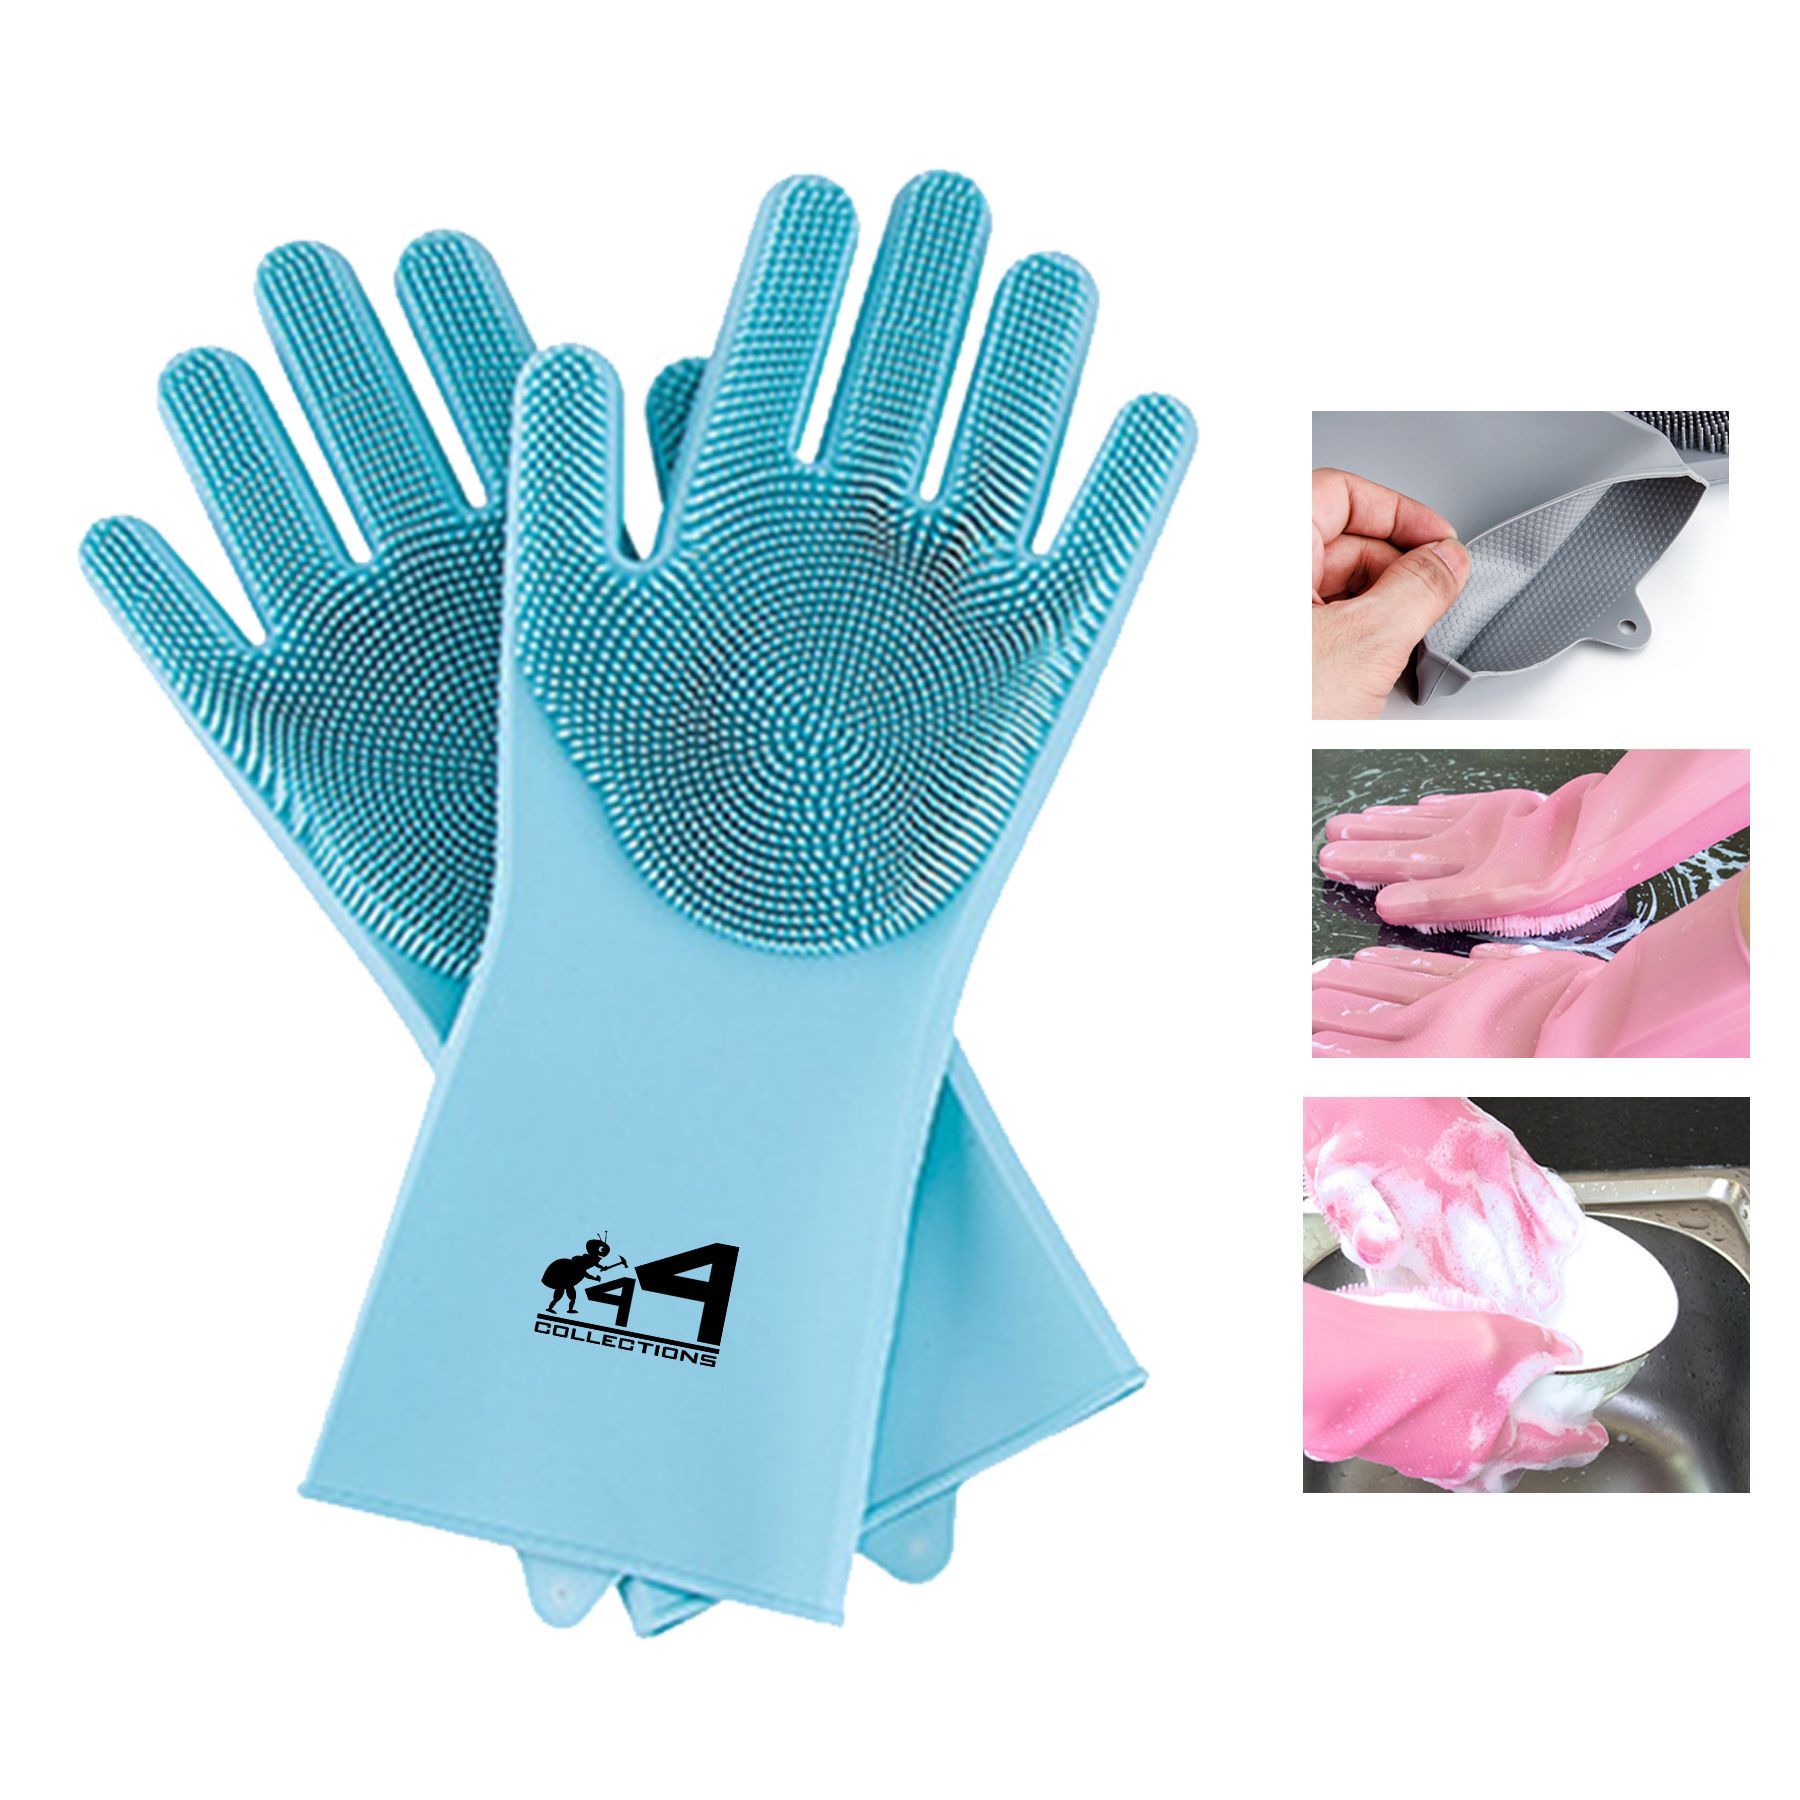 hand gloves with dish scrubbing element